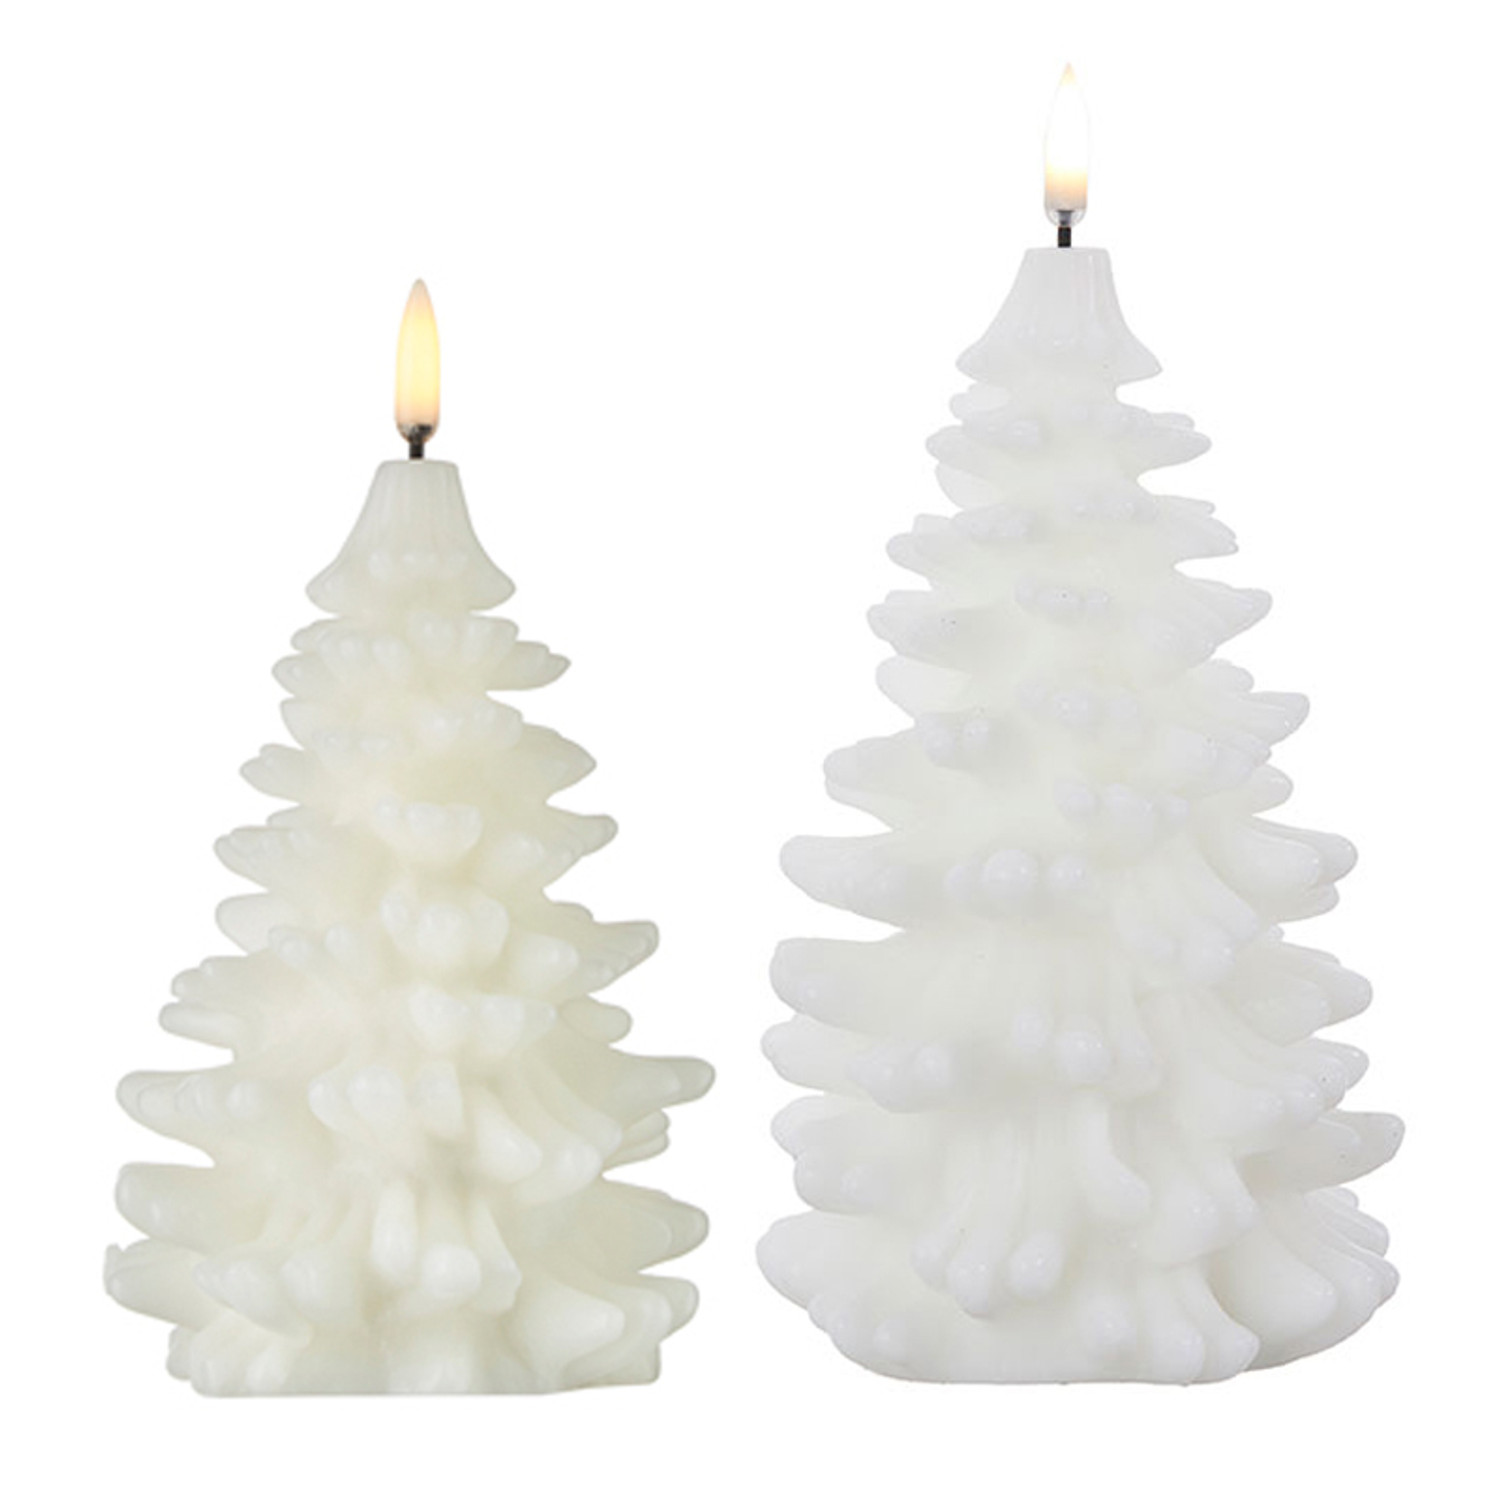 Guirlande de 20 bougies de sapin lumineuses blanches 8cm 20 LED